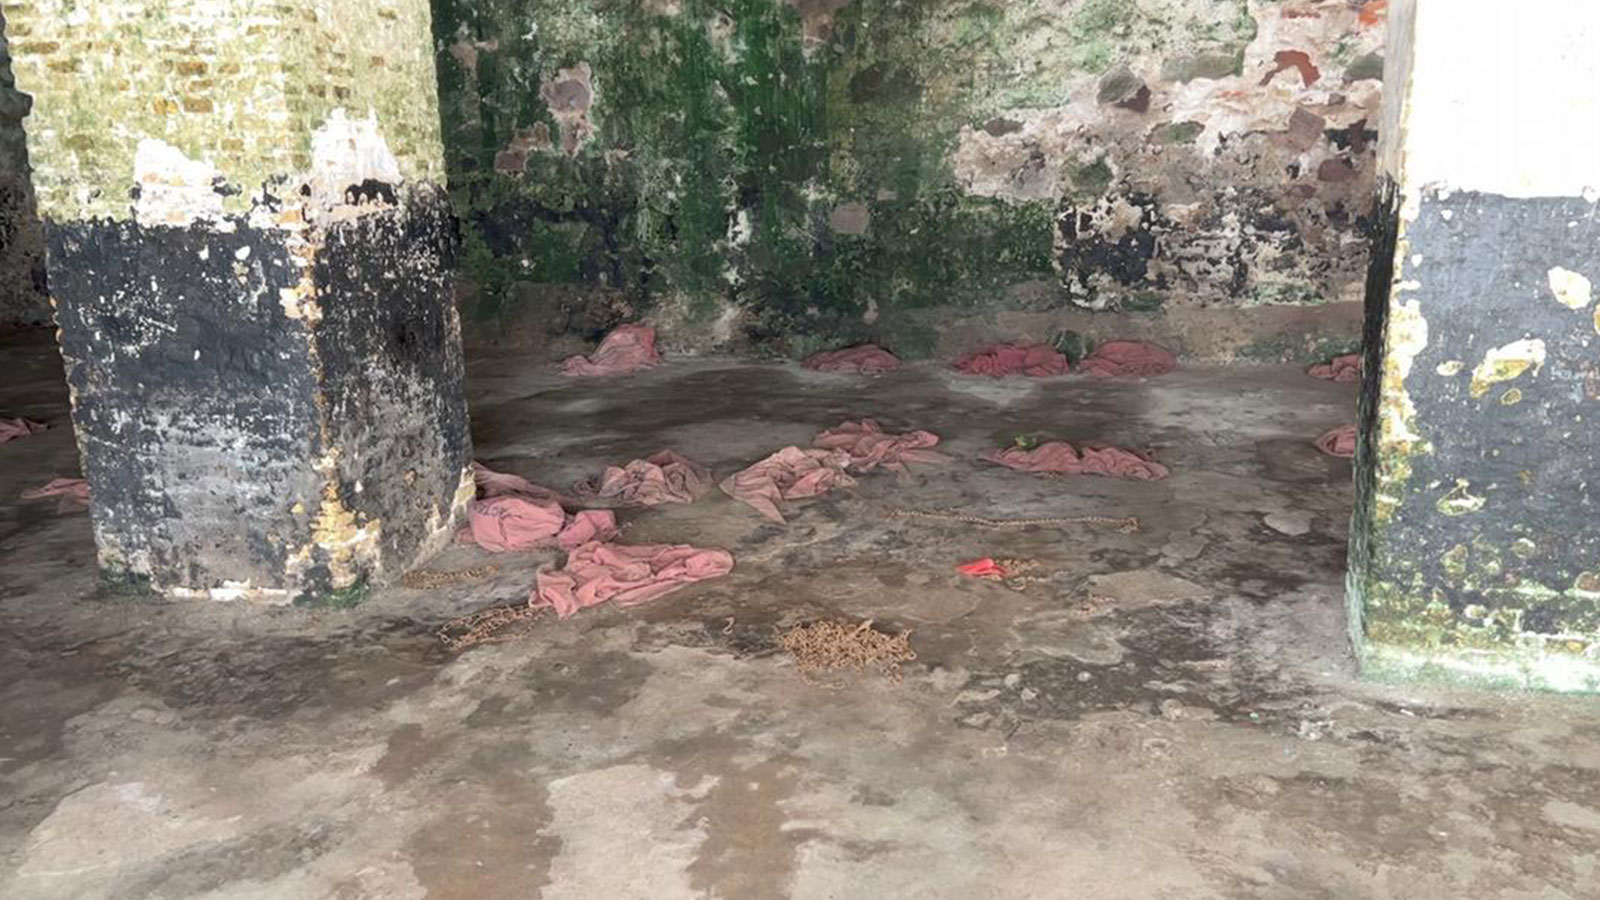 A former female slave dungeon in Elmina Castle in Ghana's central region